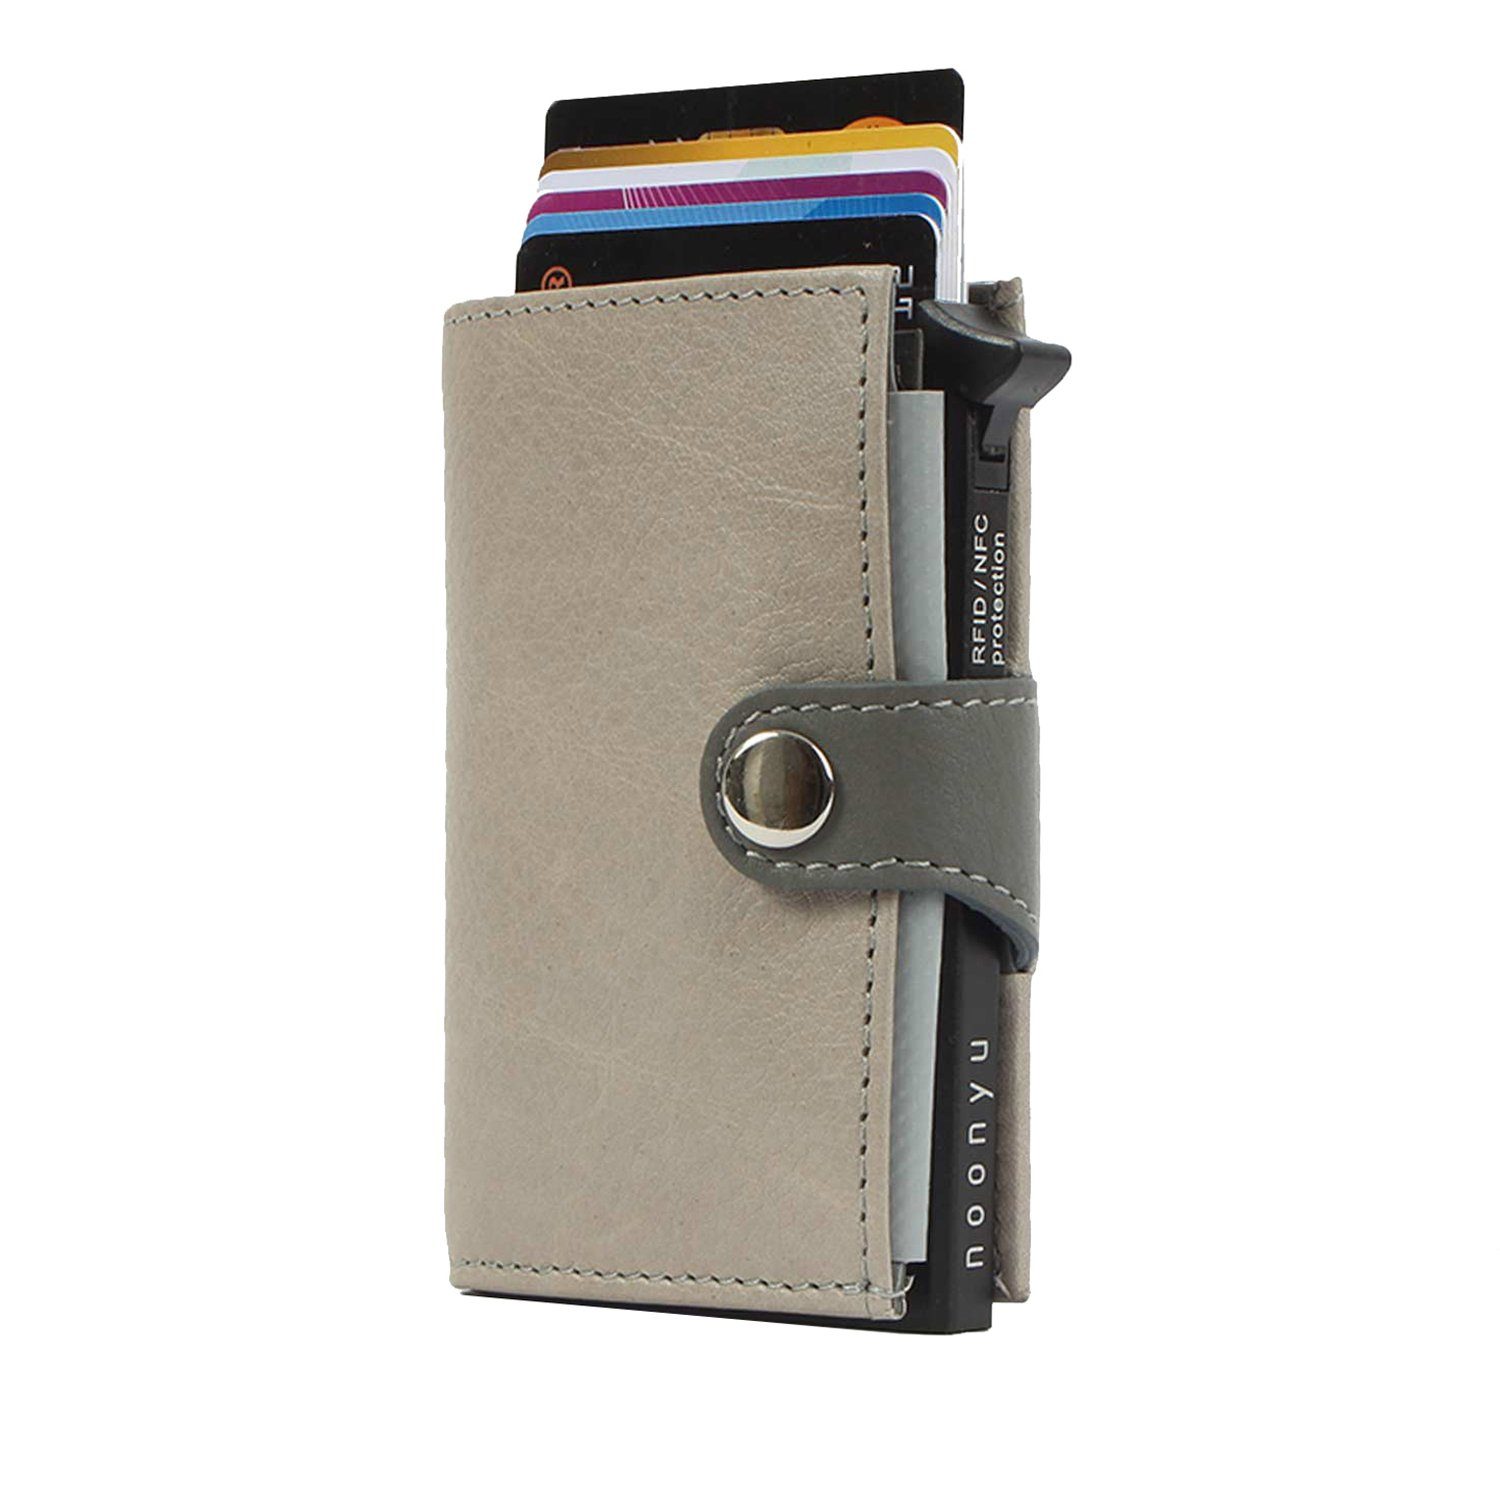 Margelisch Mini Geldbörse aus camel noonyu leather, Kreditkartenbörse Upcycling single Leder